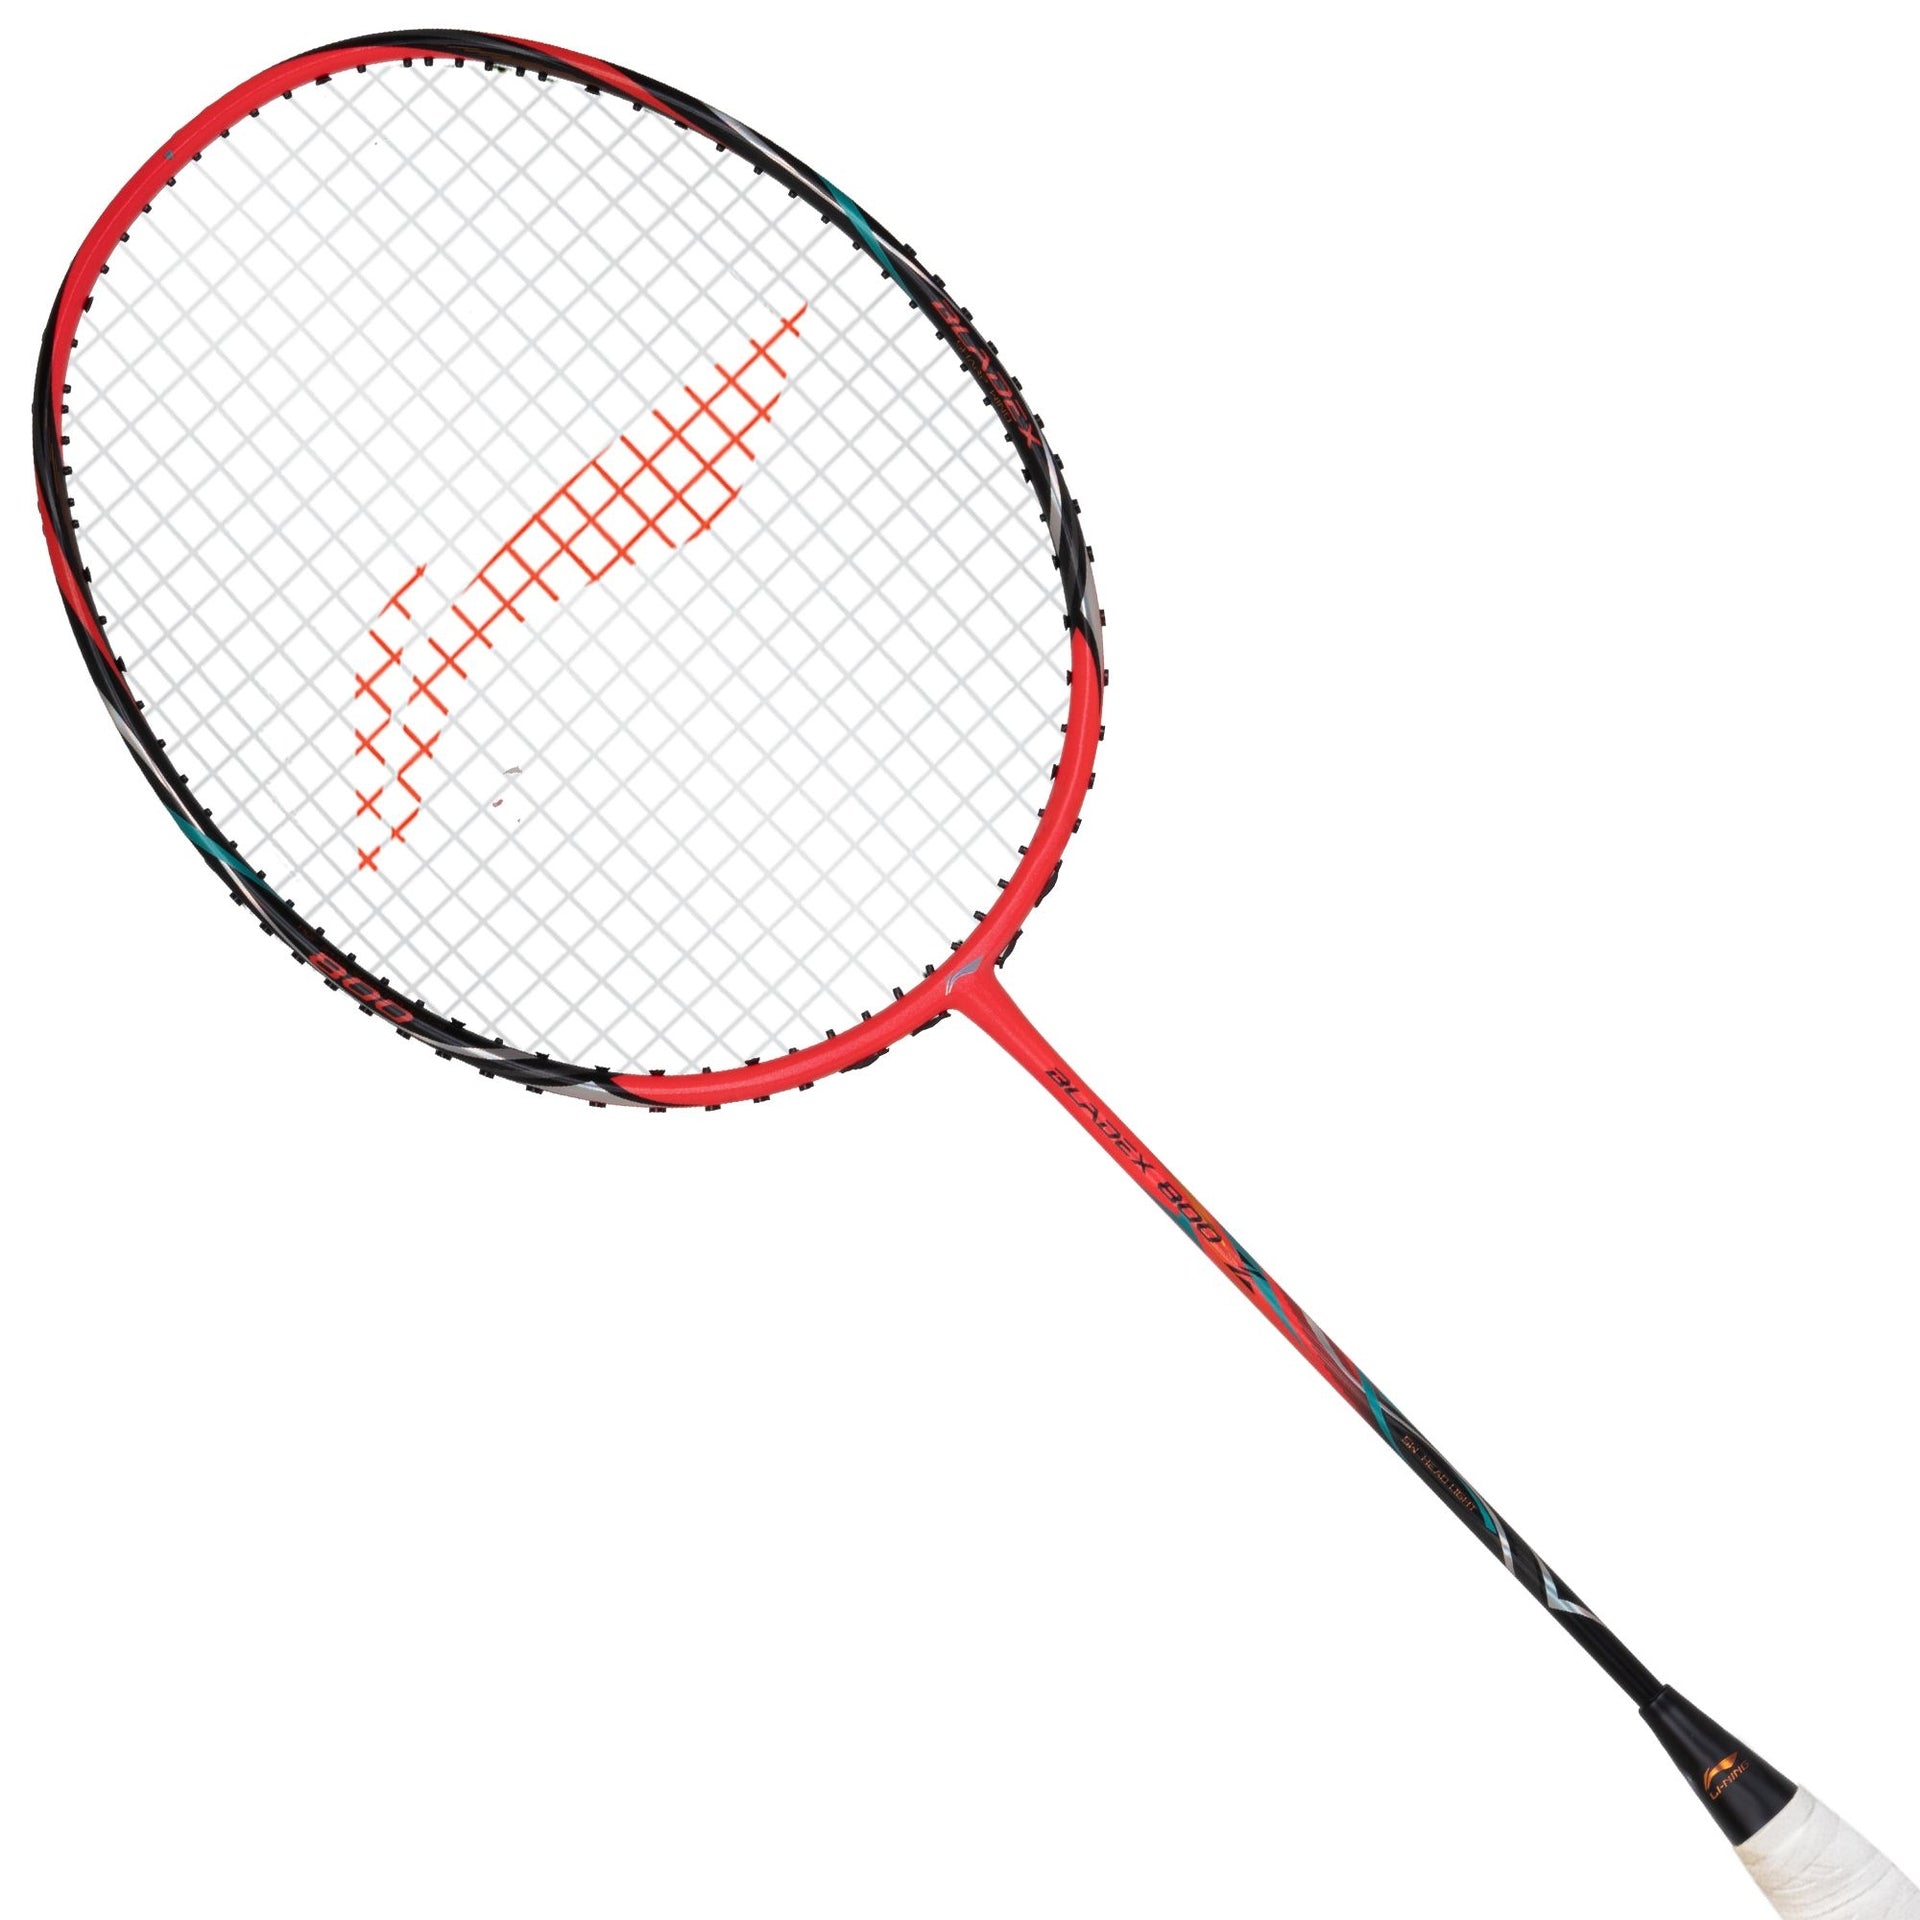 LI-NING Bladex 800 Badminton Racket | Power and Speed